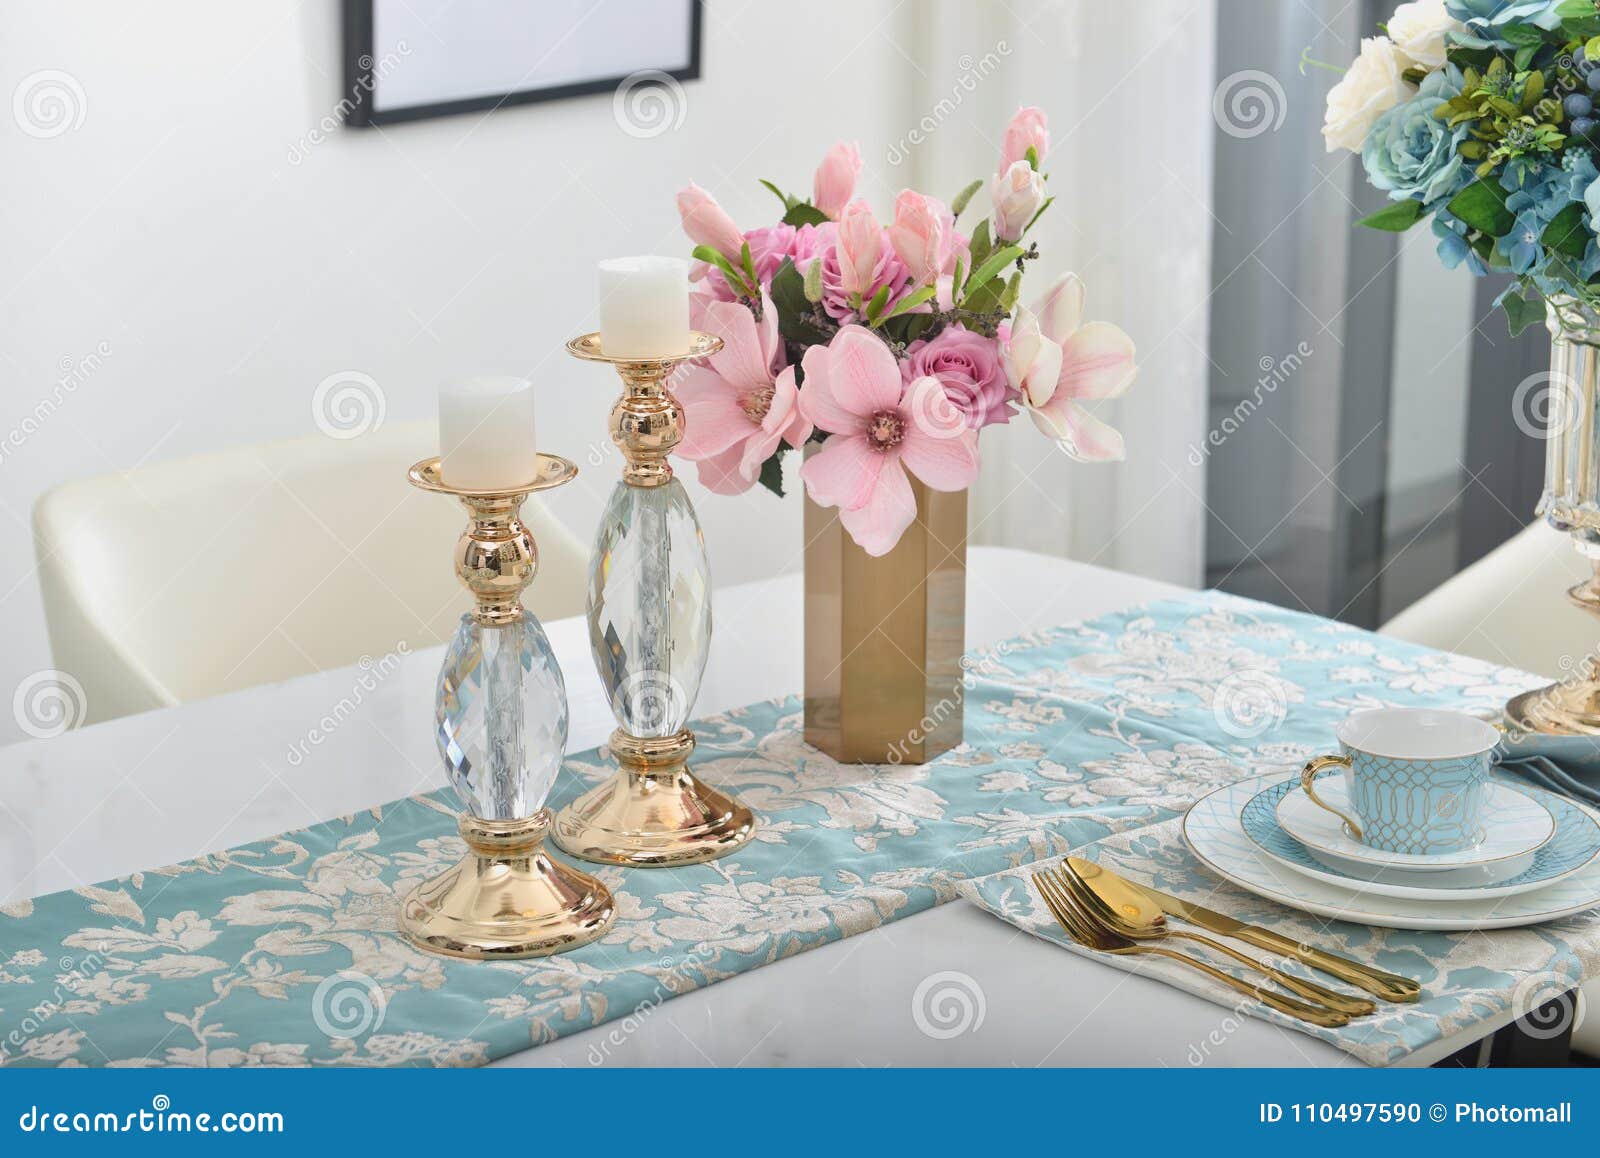 Home Interior Decordining Room Bouquet In Glass Vase Stock Photo